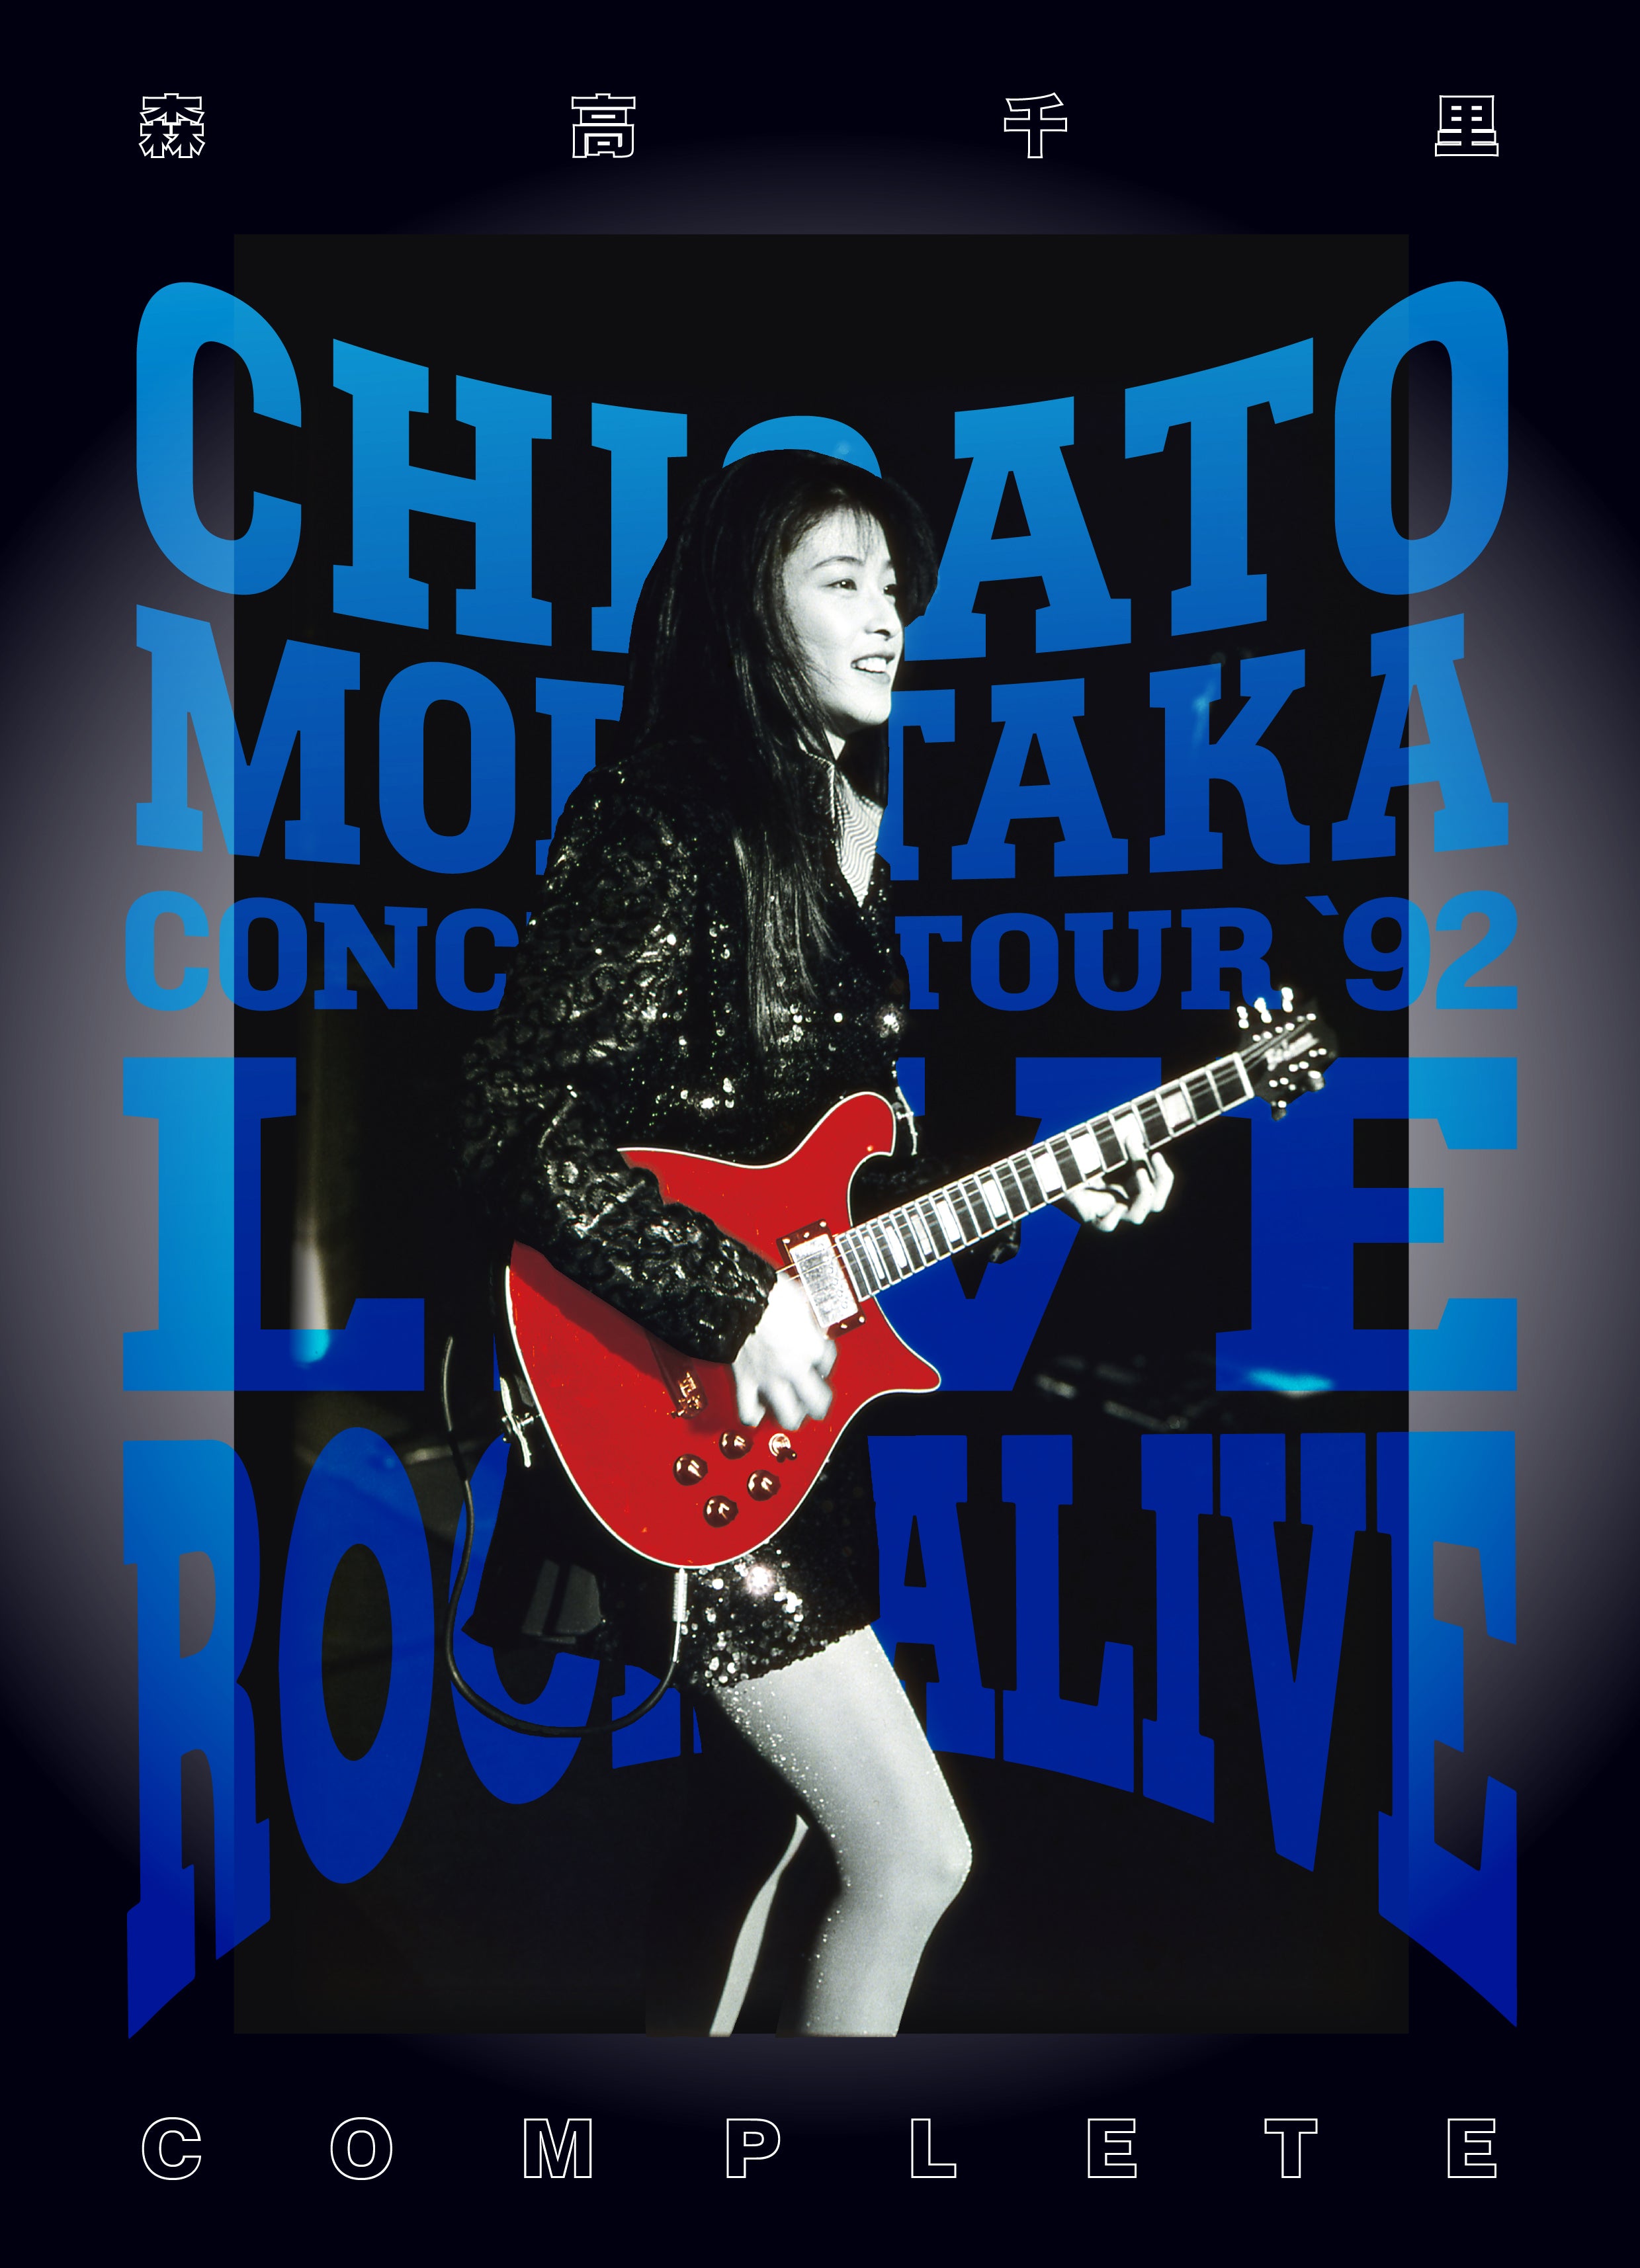 LIVE ROCK ALIVE COMPLETE【通常盤(Blu-ray＋2UHQCD)】